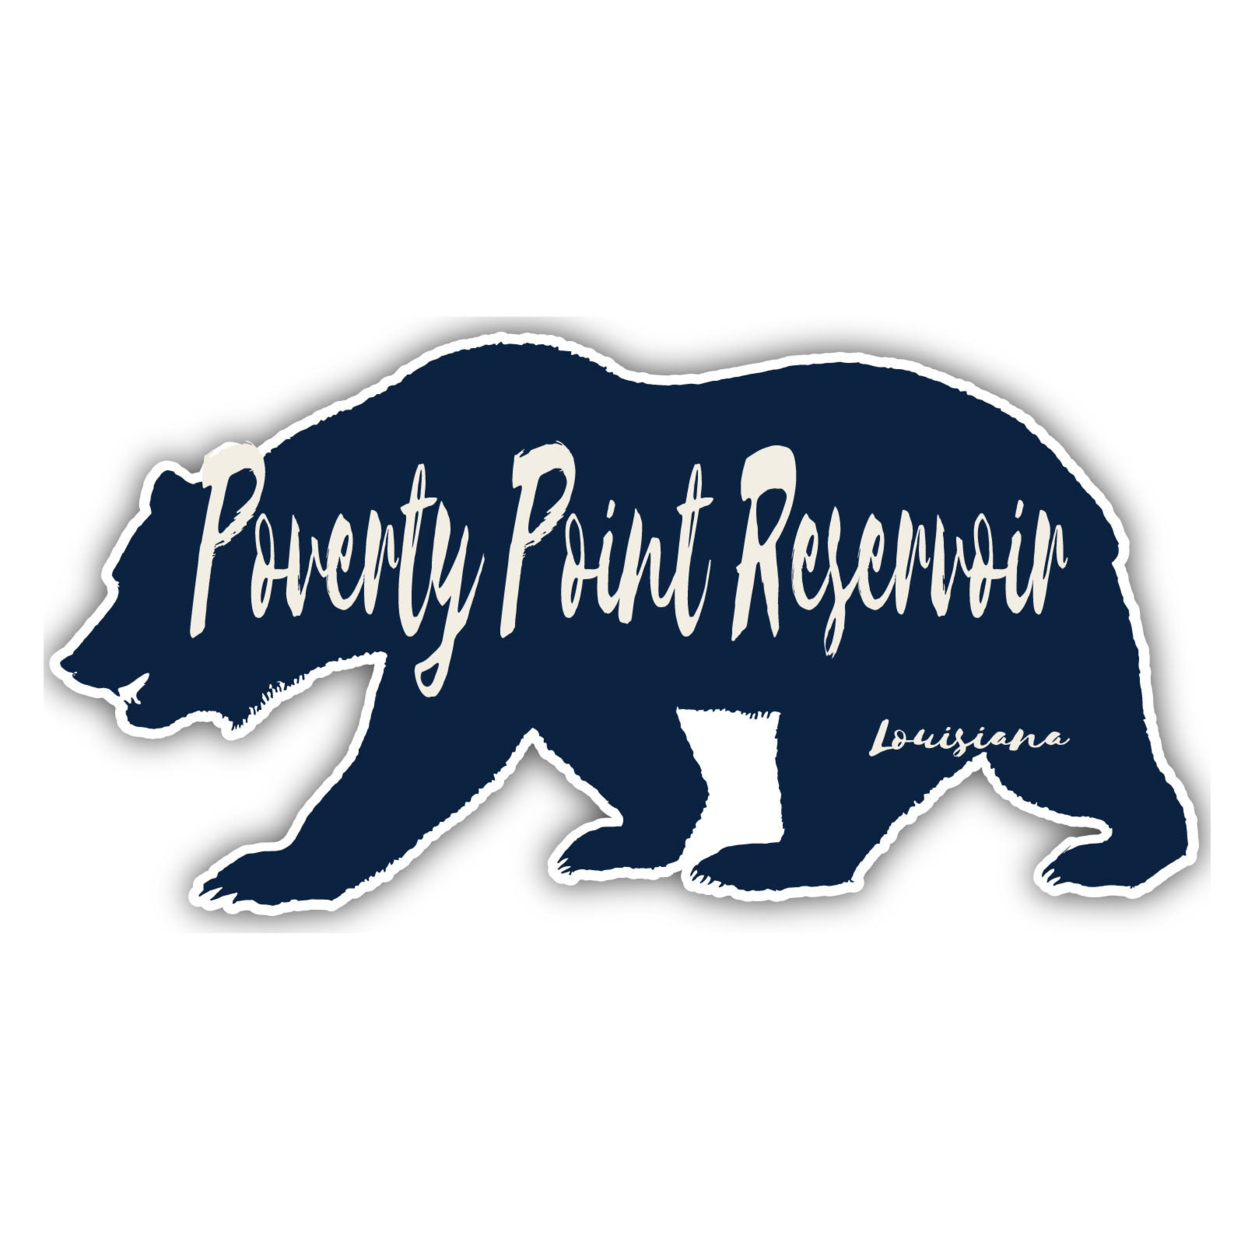 Poverty Point Reservoir Louisiana Souvenir Decorative Stickers (Choose Theme And Size) - Single Unit, 4-Inch, Bear